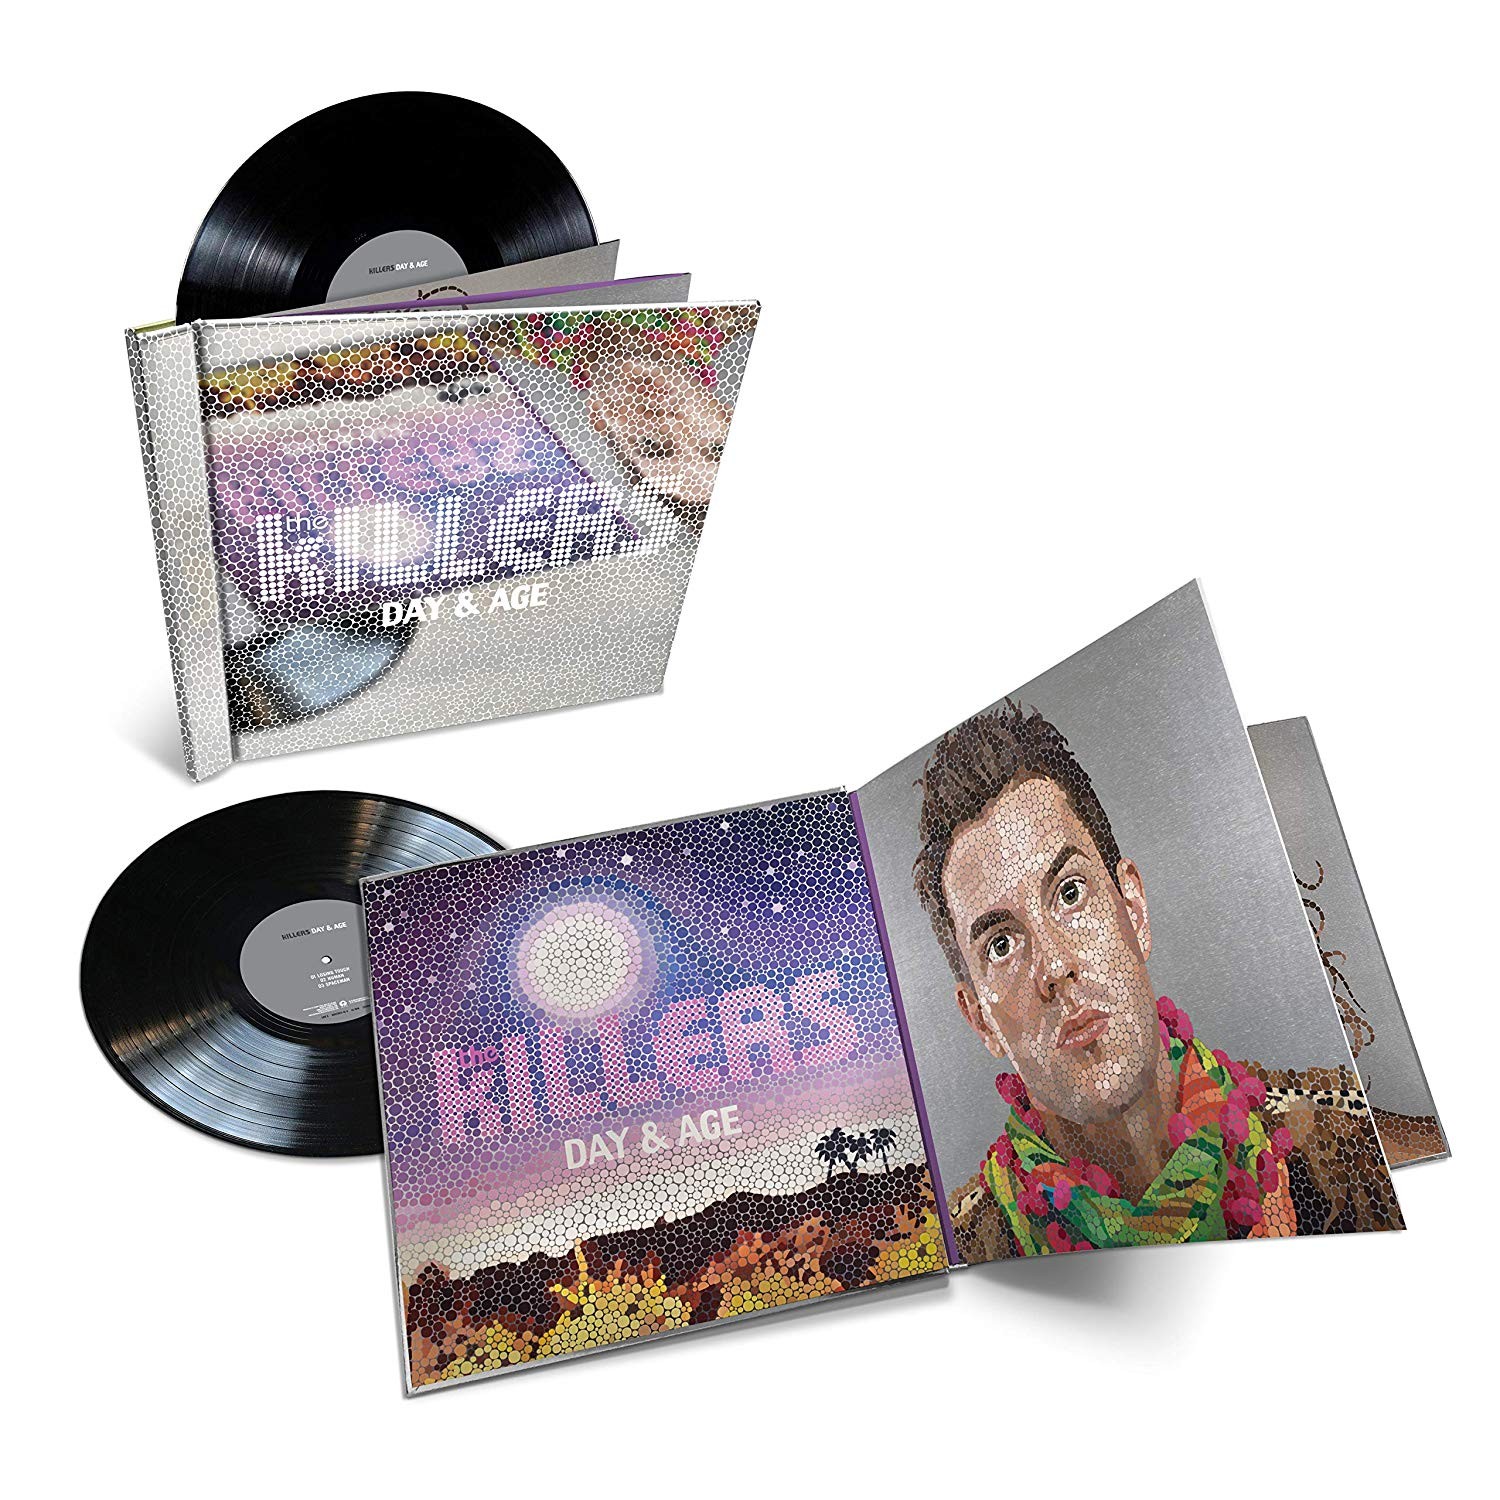 The Killers - Day & Age (Deluxe) 2XLP vinyl